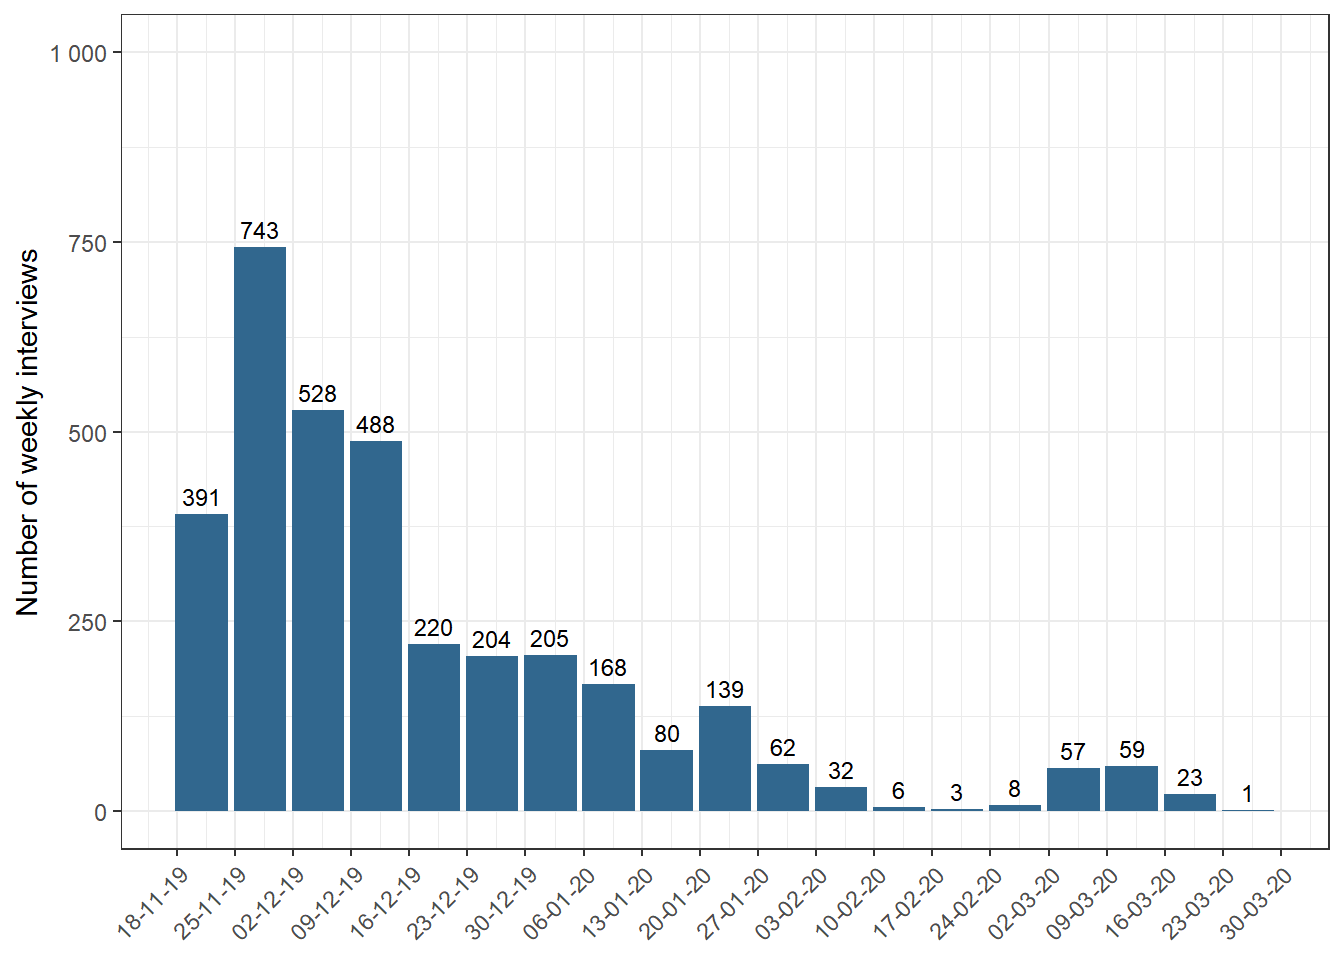 Number of weekly interviews, wave 2019